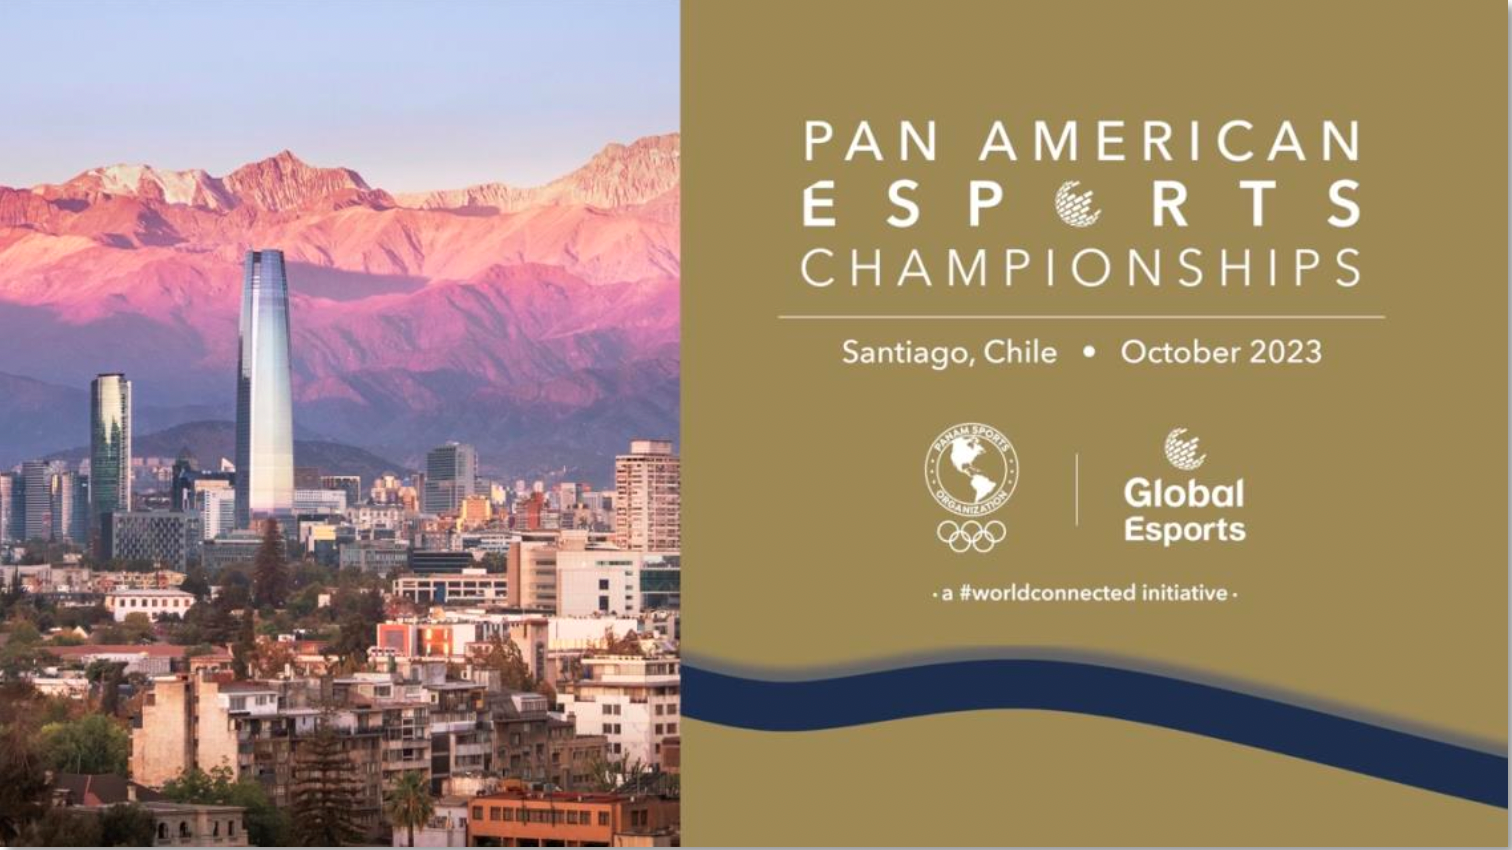 Esports event alongside Santiago 2023 to take place at National Stadium Sports Park